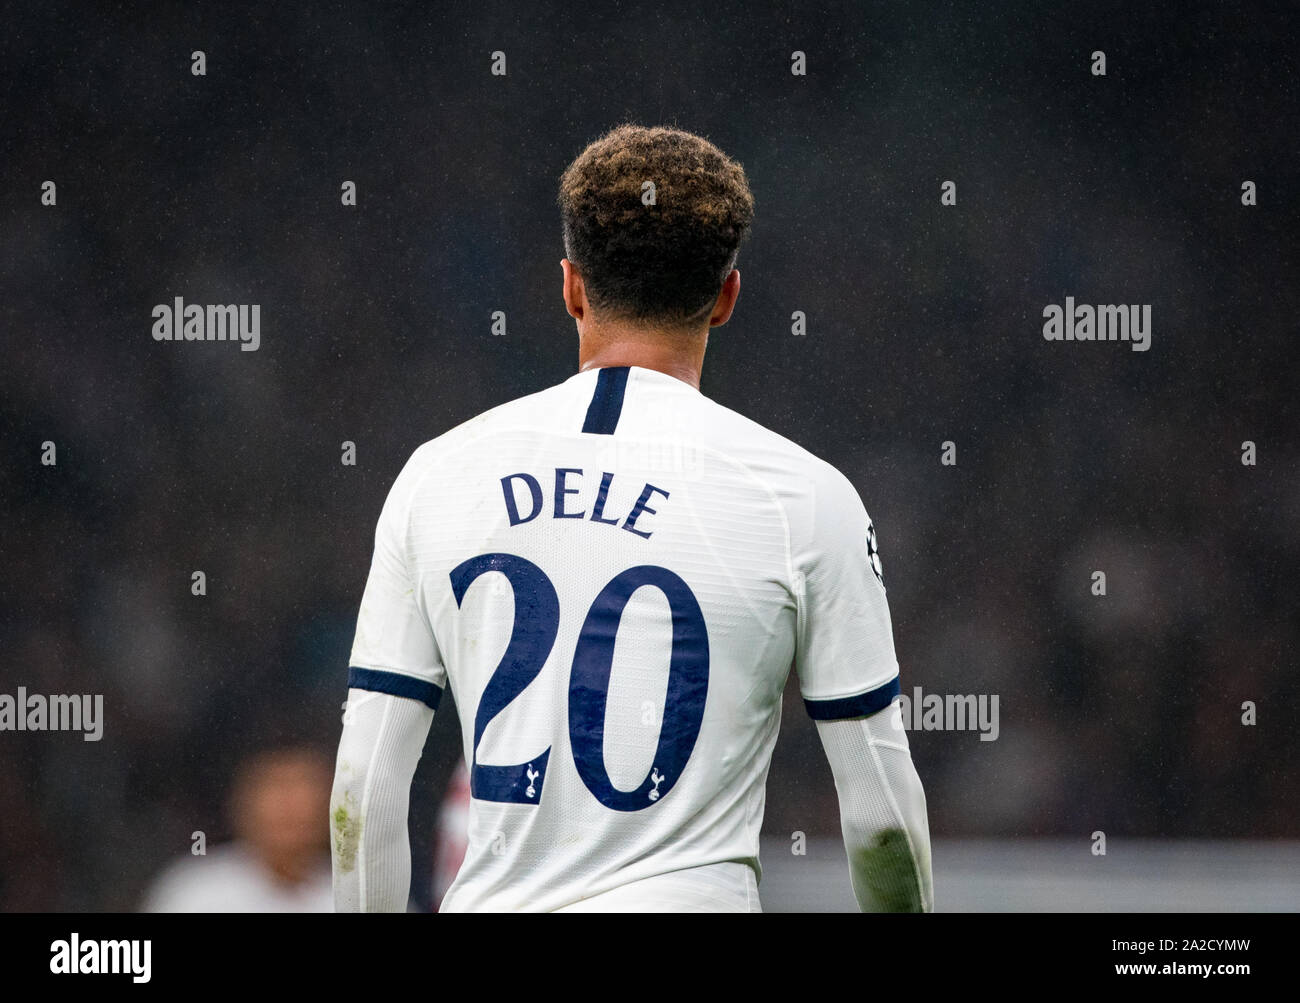 Dele Alli Tottenham Hotspur Autographed 2019-2020 Home Jersey